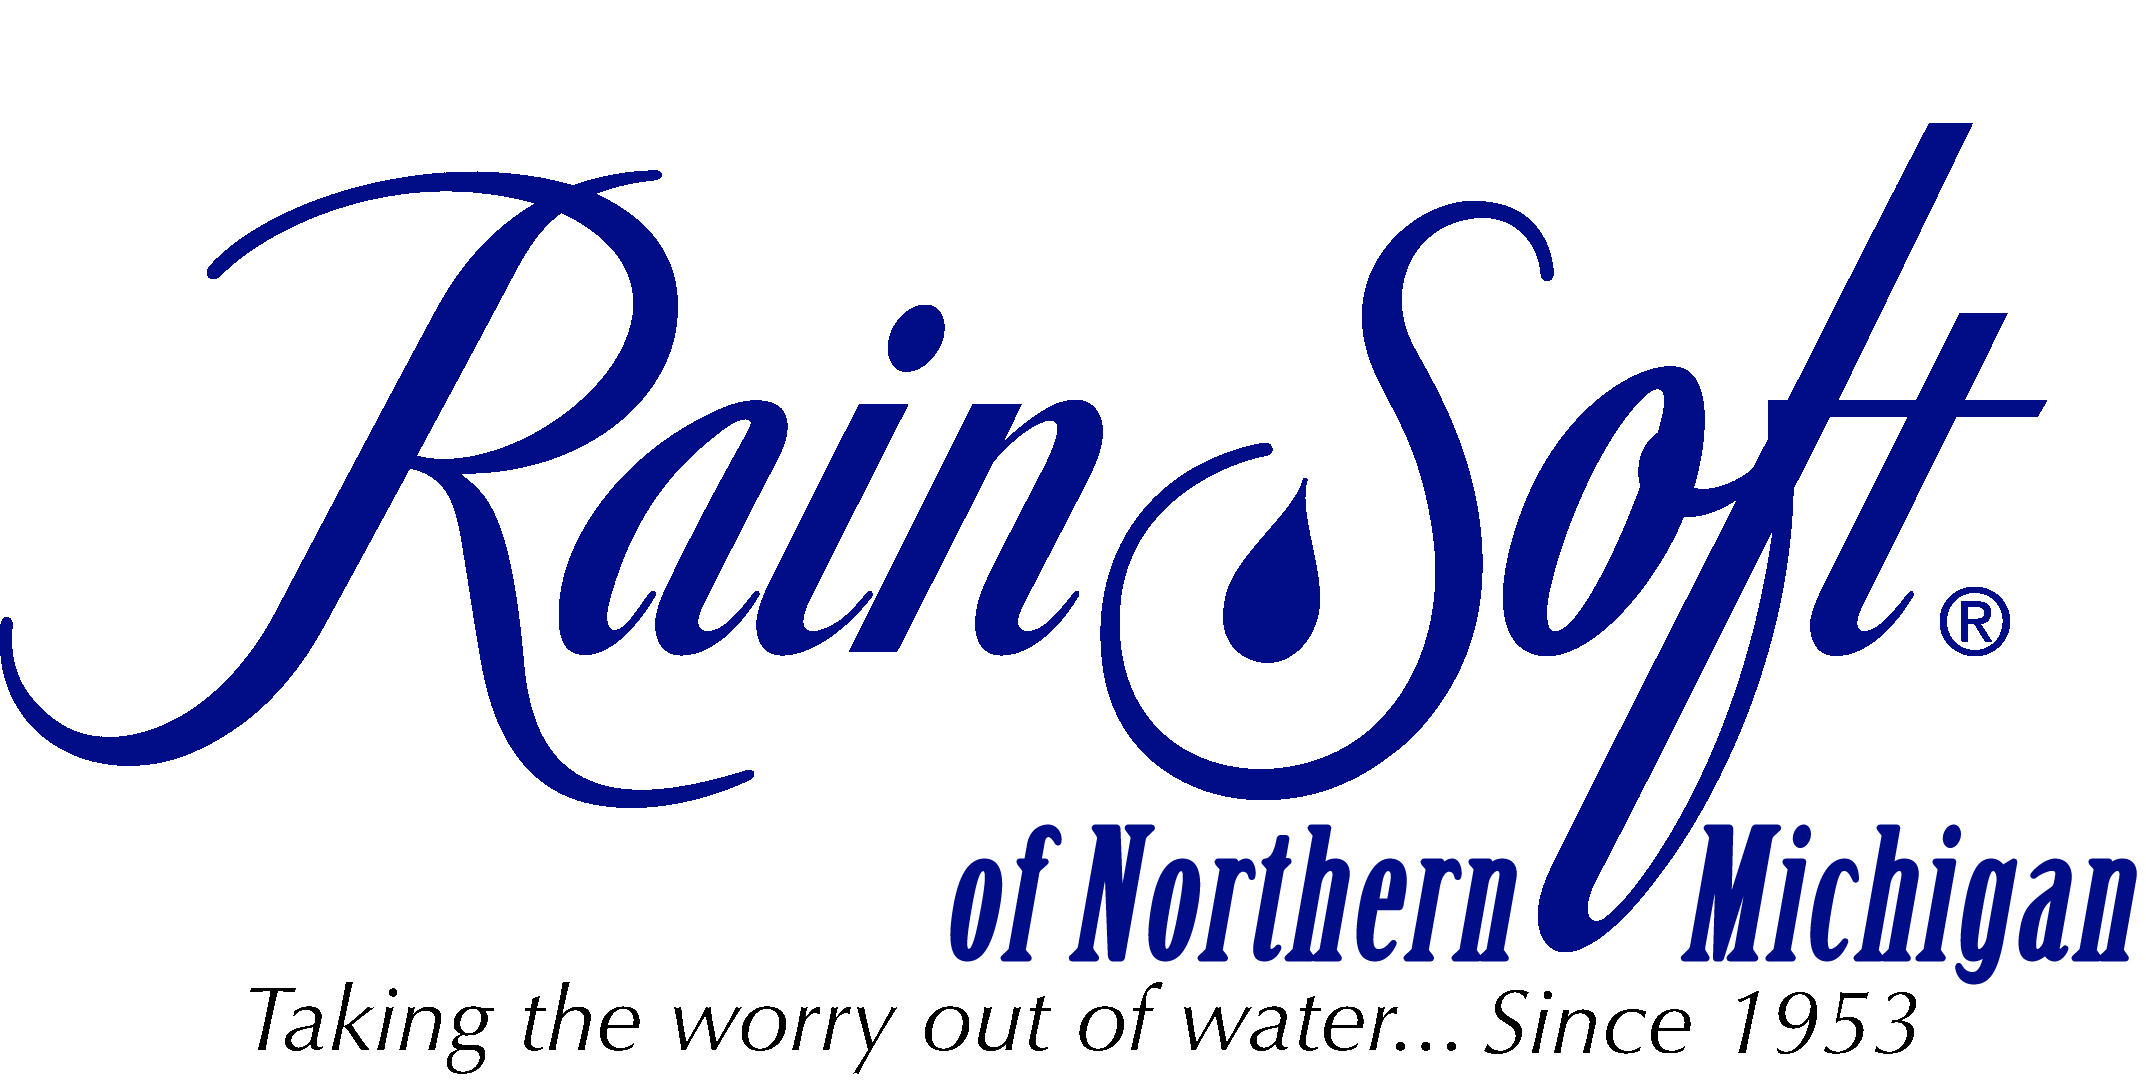 RainSoft of Northern Michigan